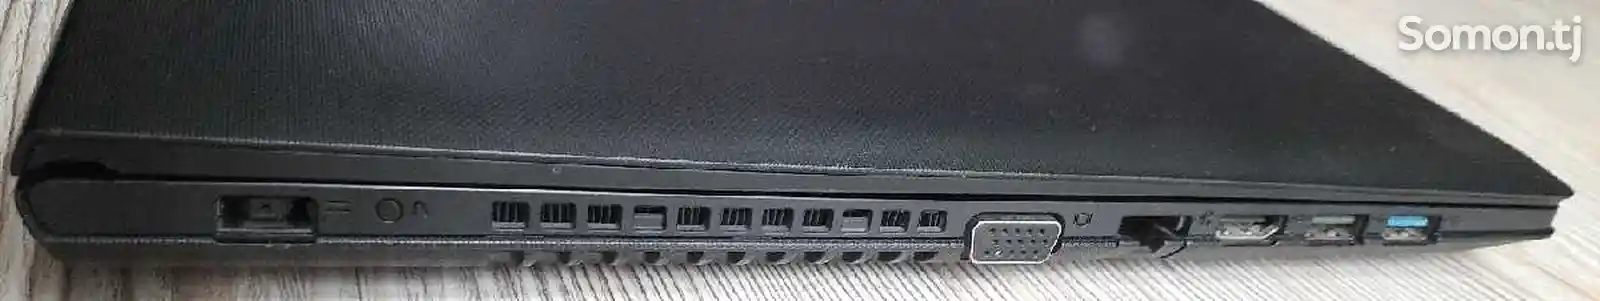 Ноутбук Lenovo G-50/45-7